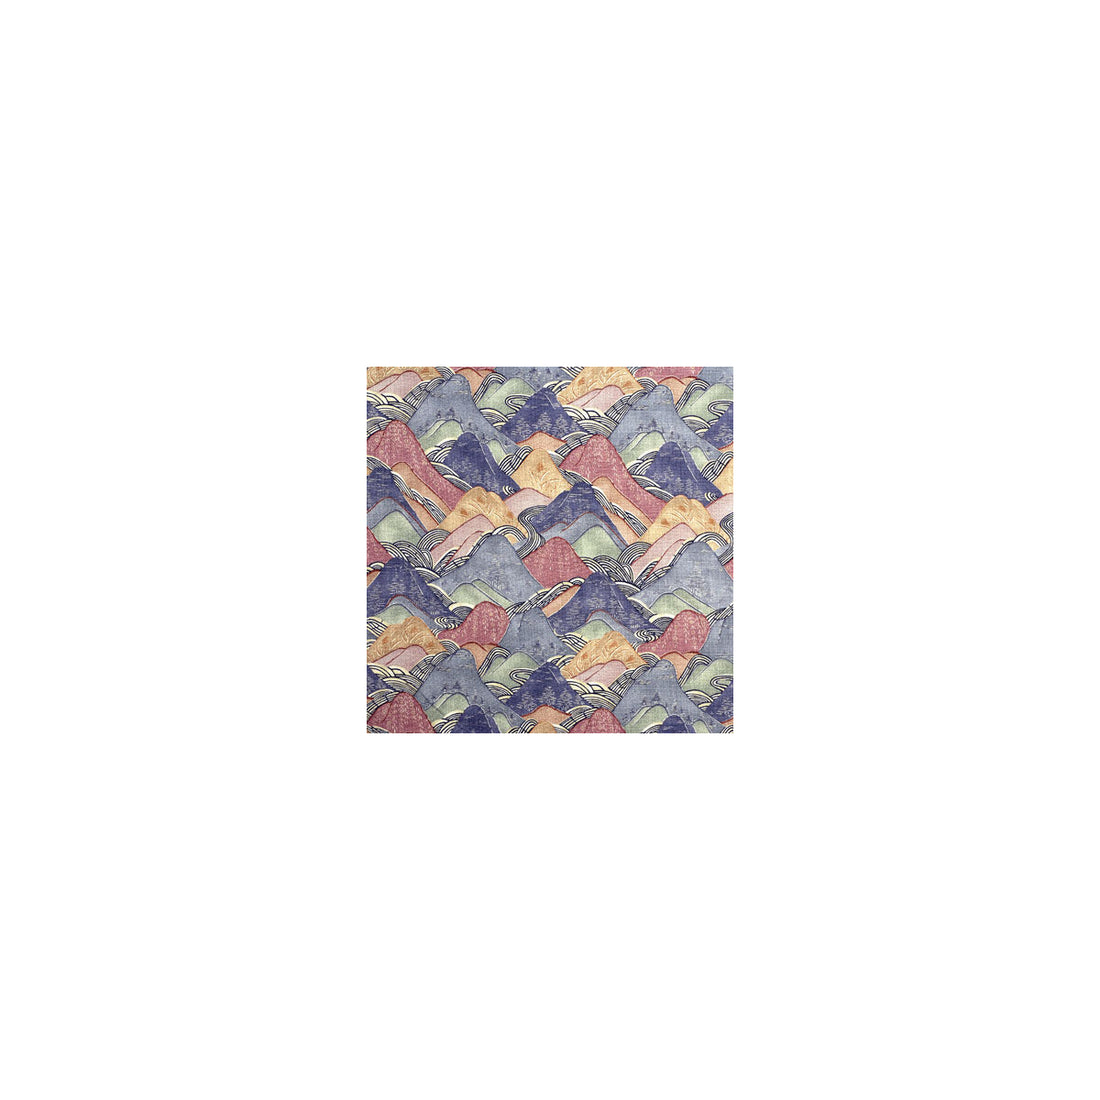 Edo Linen fabric in opal color - pattern GWF-2814.710.0 - by Lee Jofa Modern in the Kelly Wearstler collection